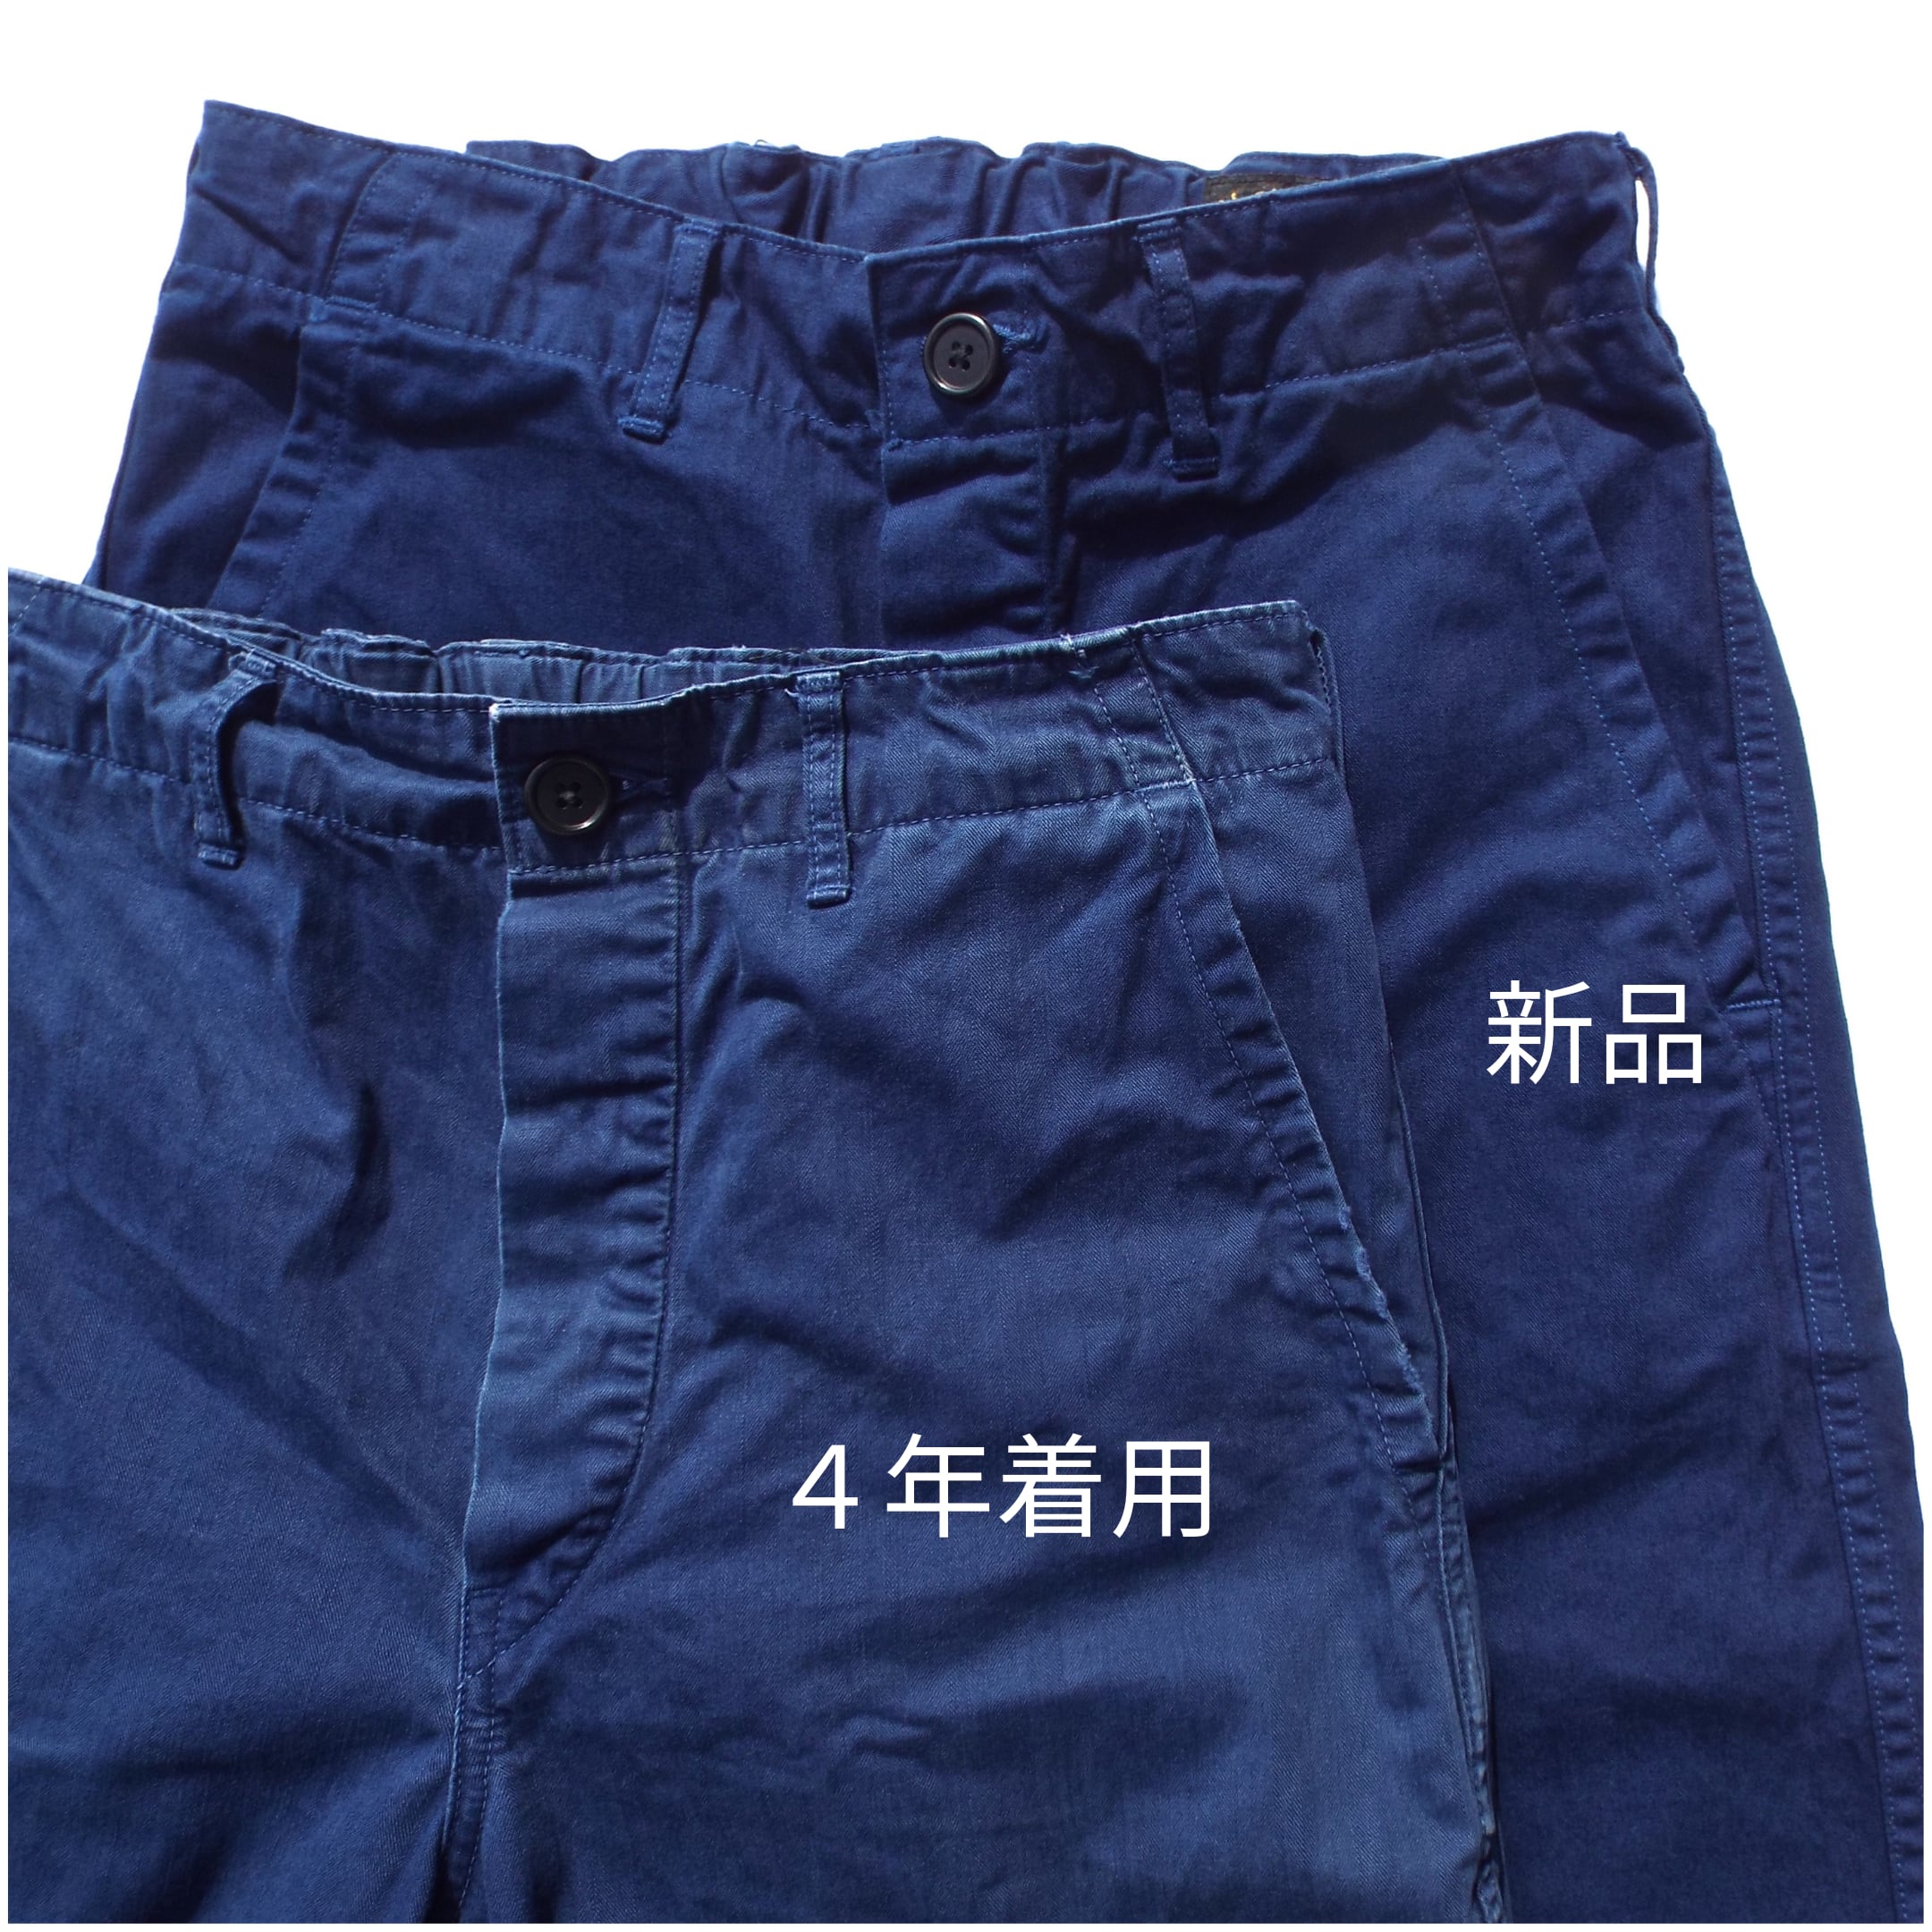 【orSlow】French Work Pants (INK BLUE) | ファーサイドストア